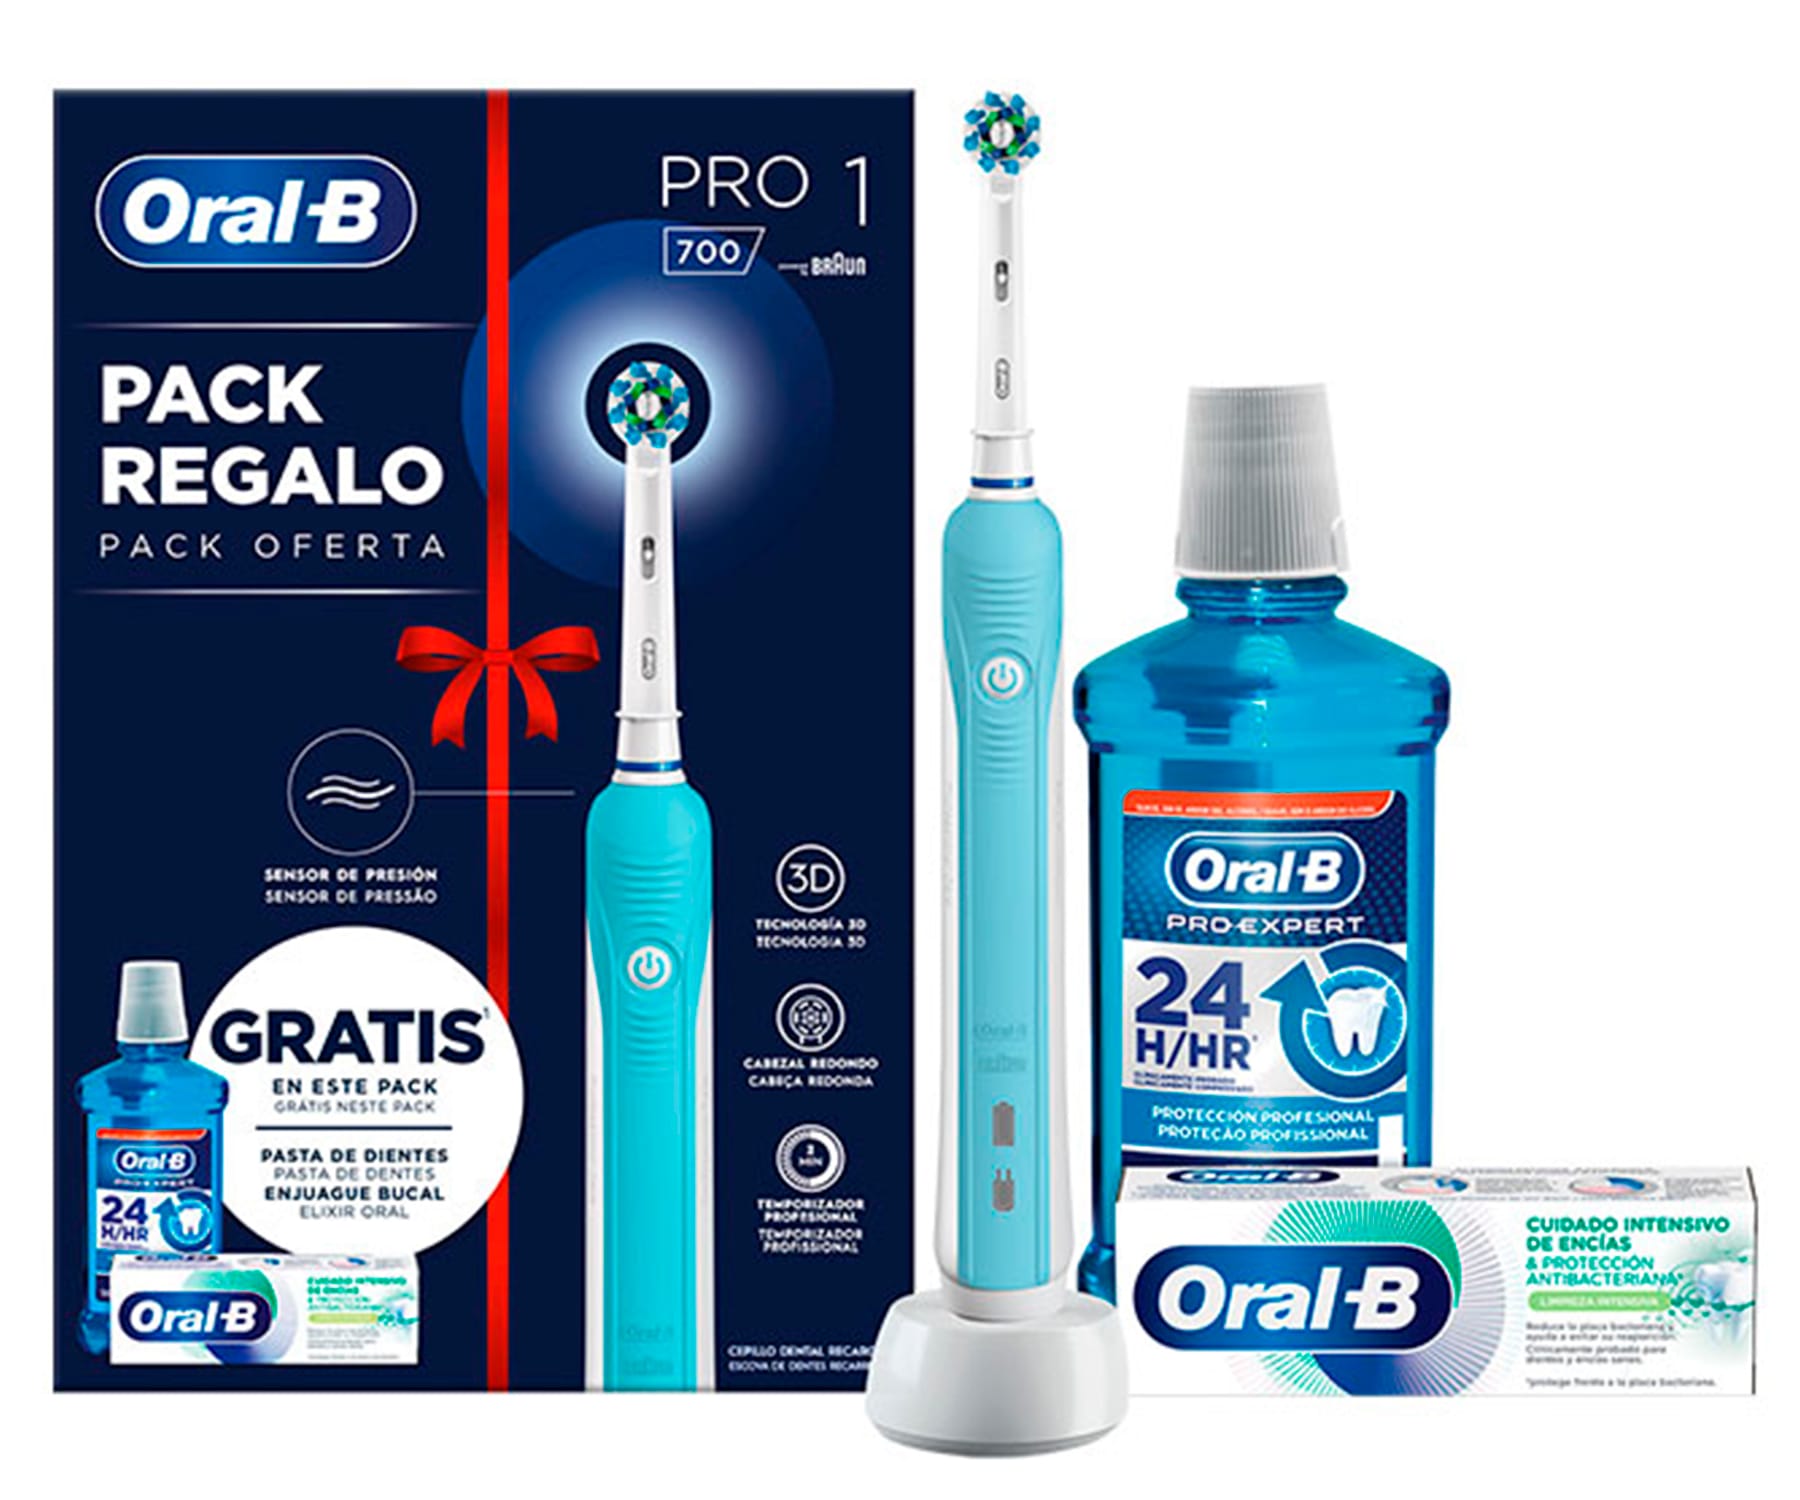 BRAUN ORAL-B Pro 1 700 /  Cepillo de dientes eléctrico recargable